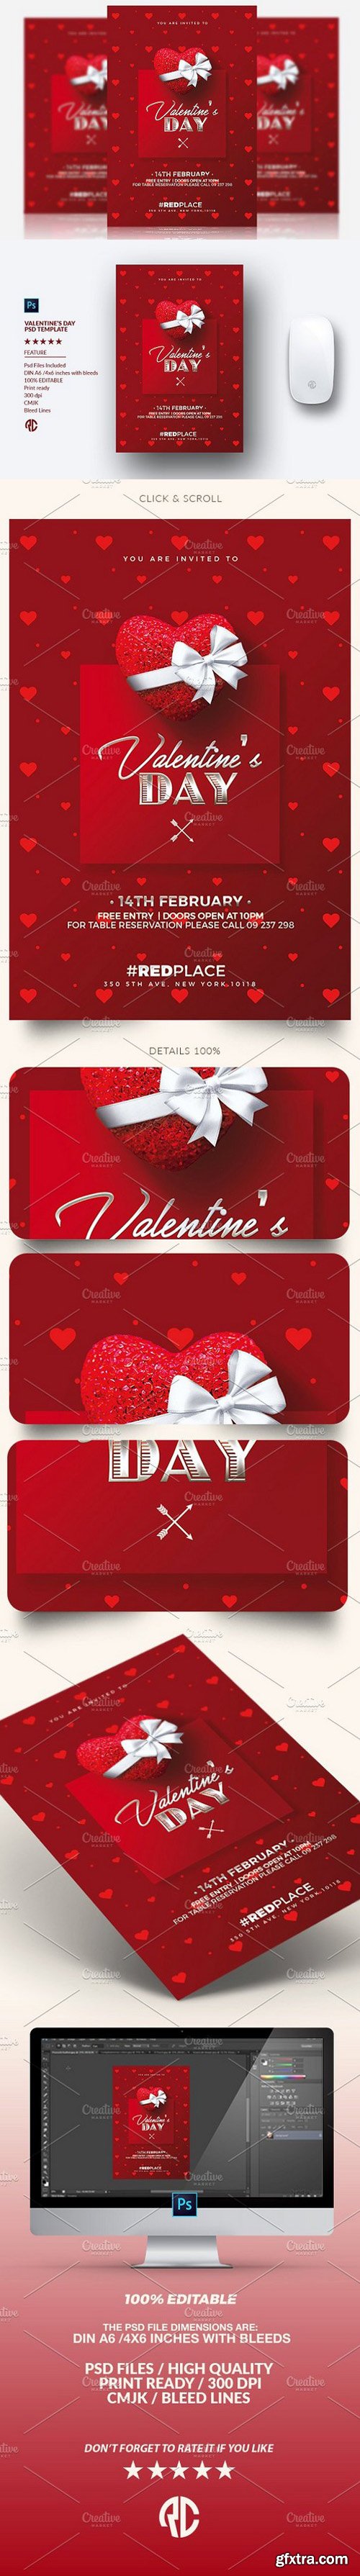 CM - Valentine\'s Day - Psd Invitation 1186203